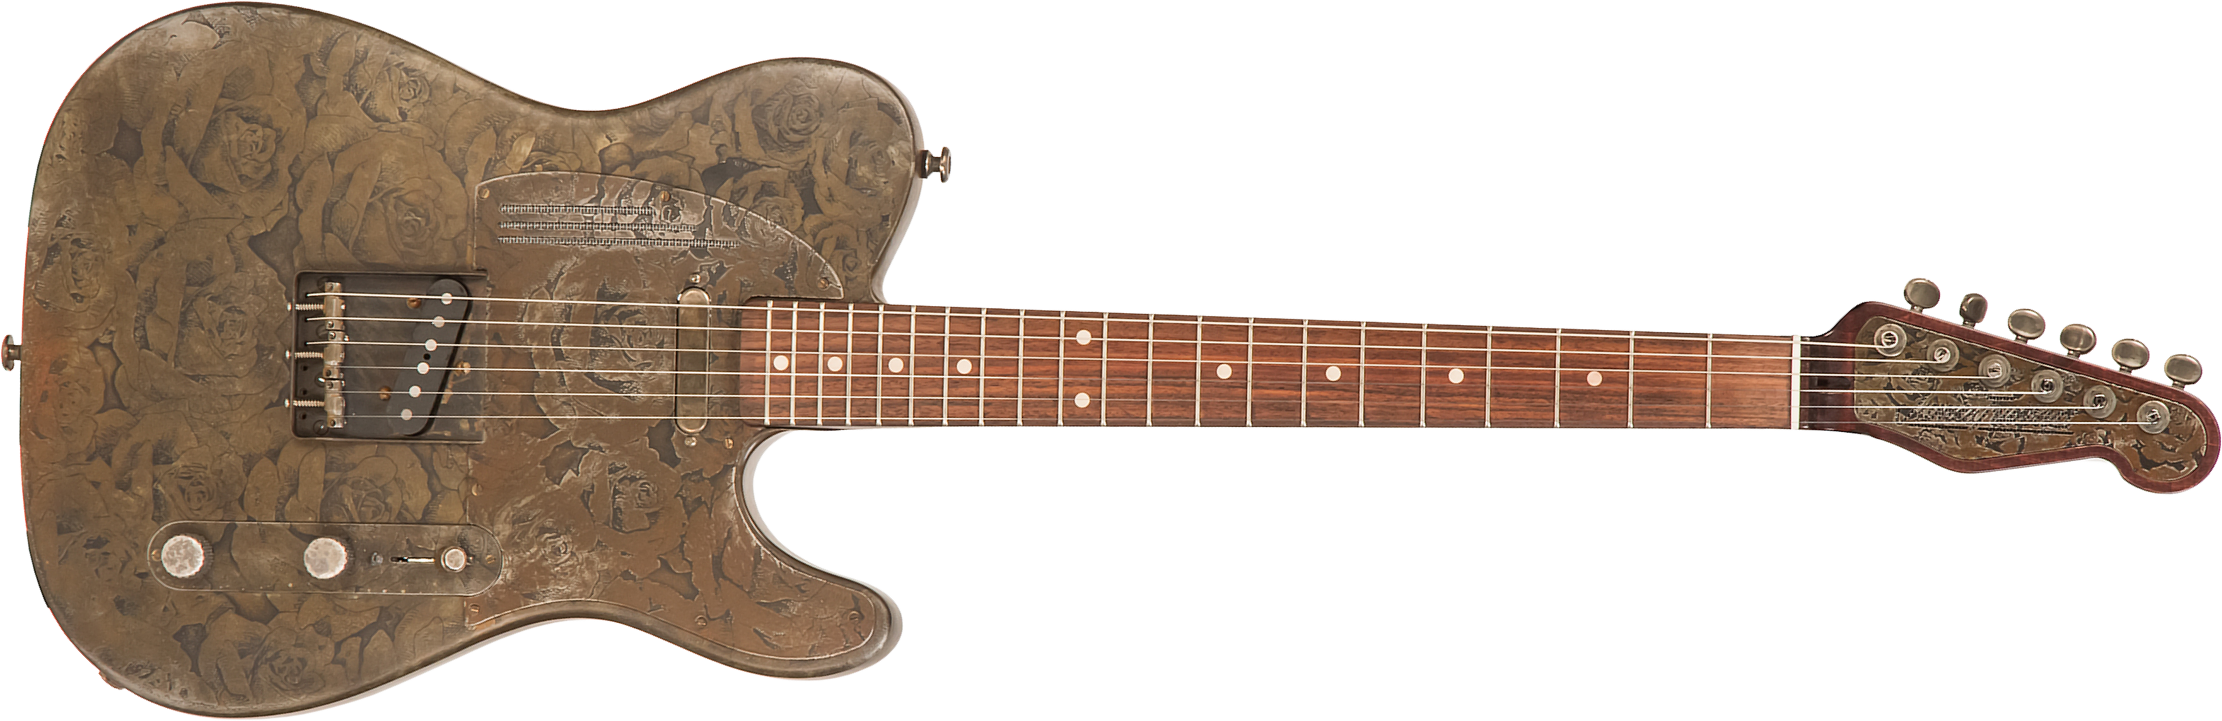 James Trussart Steelcaster Perf.back 2s Ht Rw #21000 - Rusty Roses - Semi hollow elektriche gitaar - Main picture